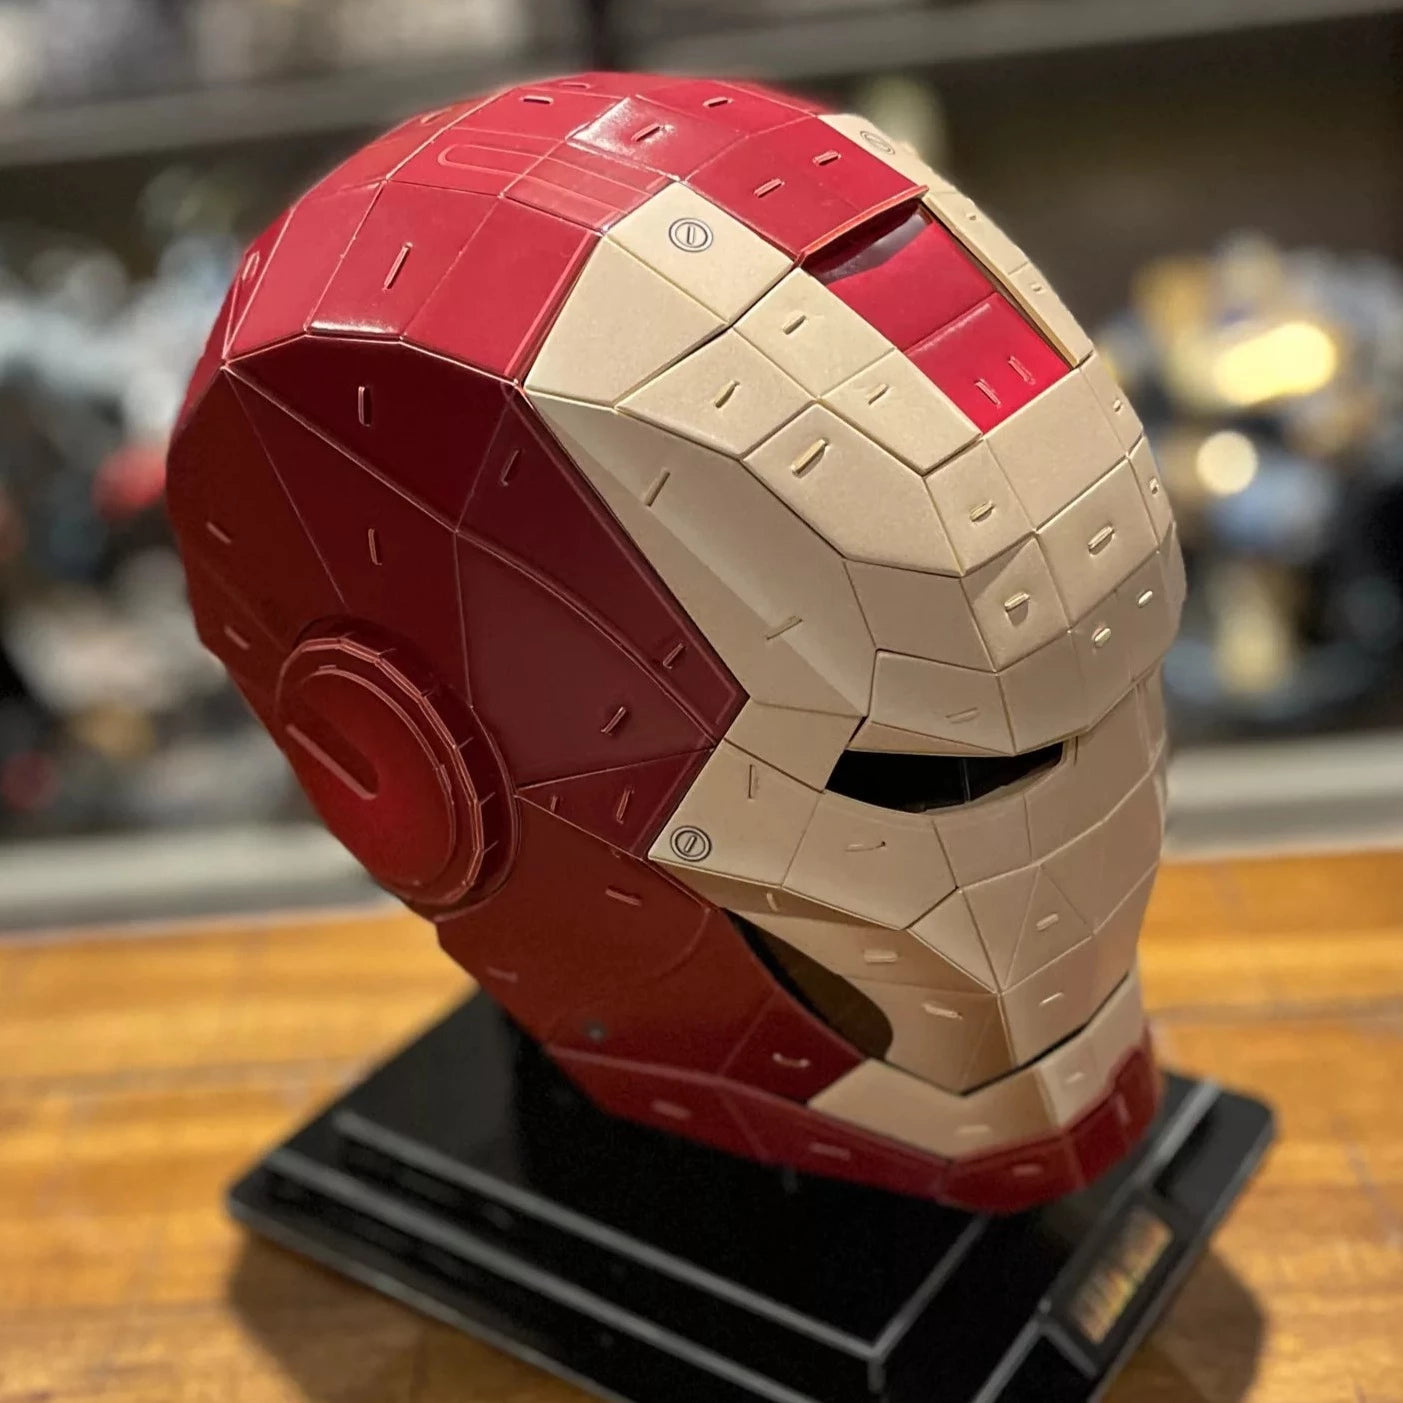 3D Puzzle | Marvel Studios: Iron Man Helmet Model - Weirs of Baggot St